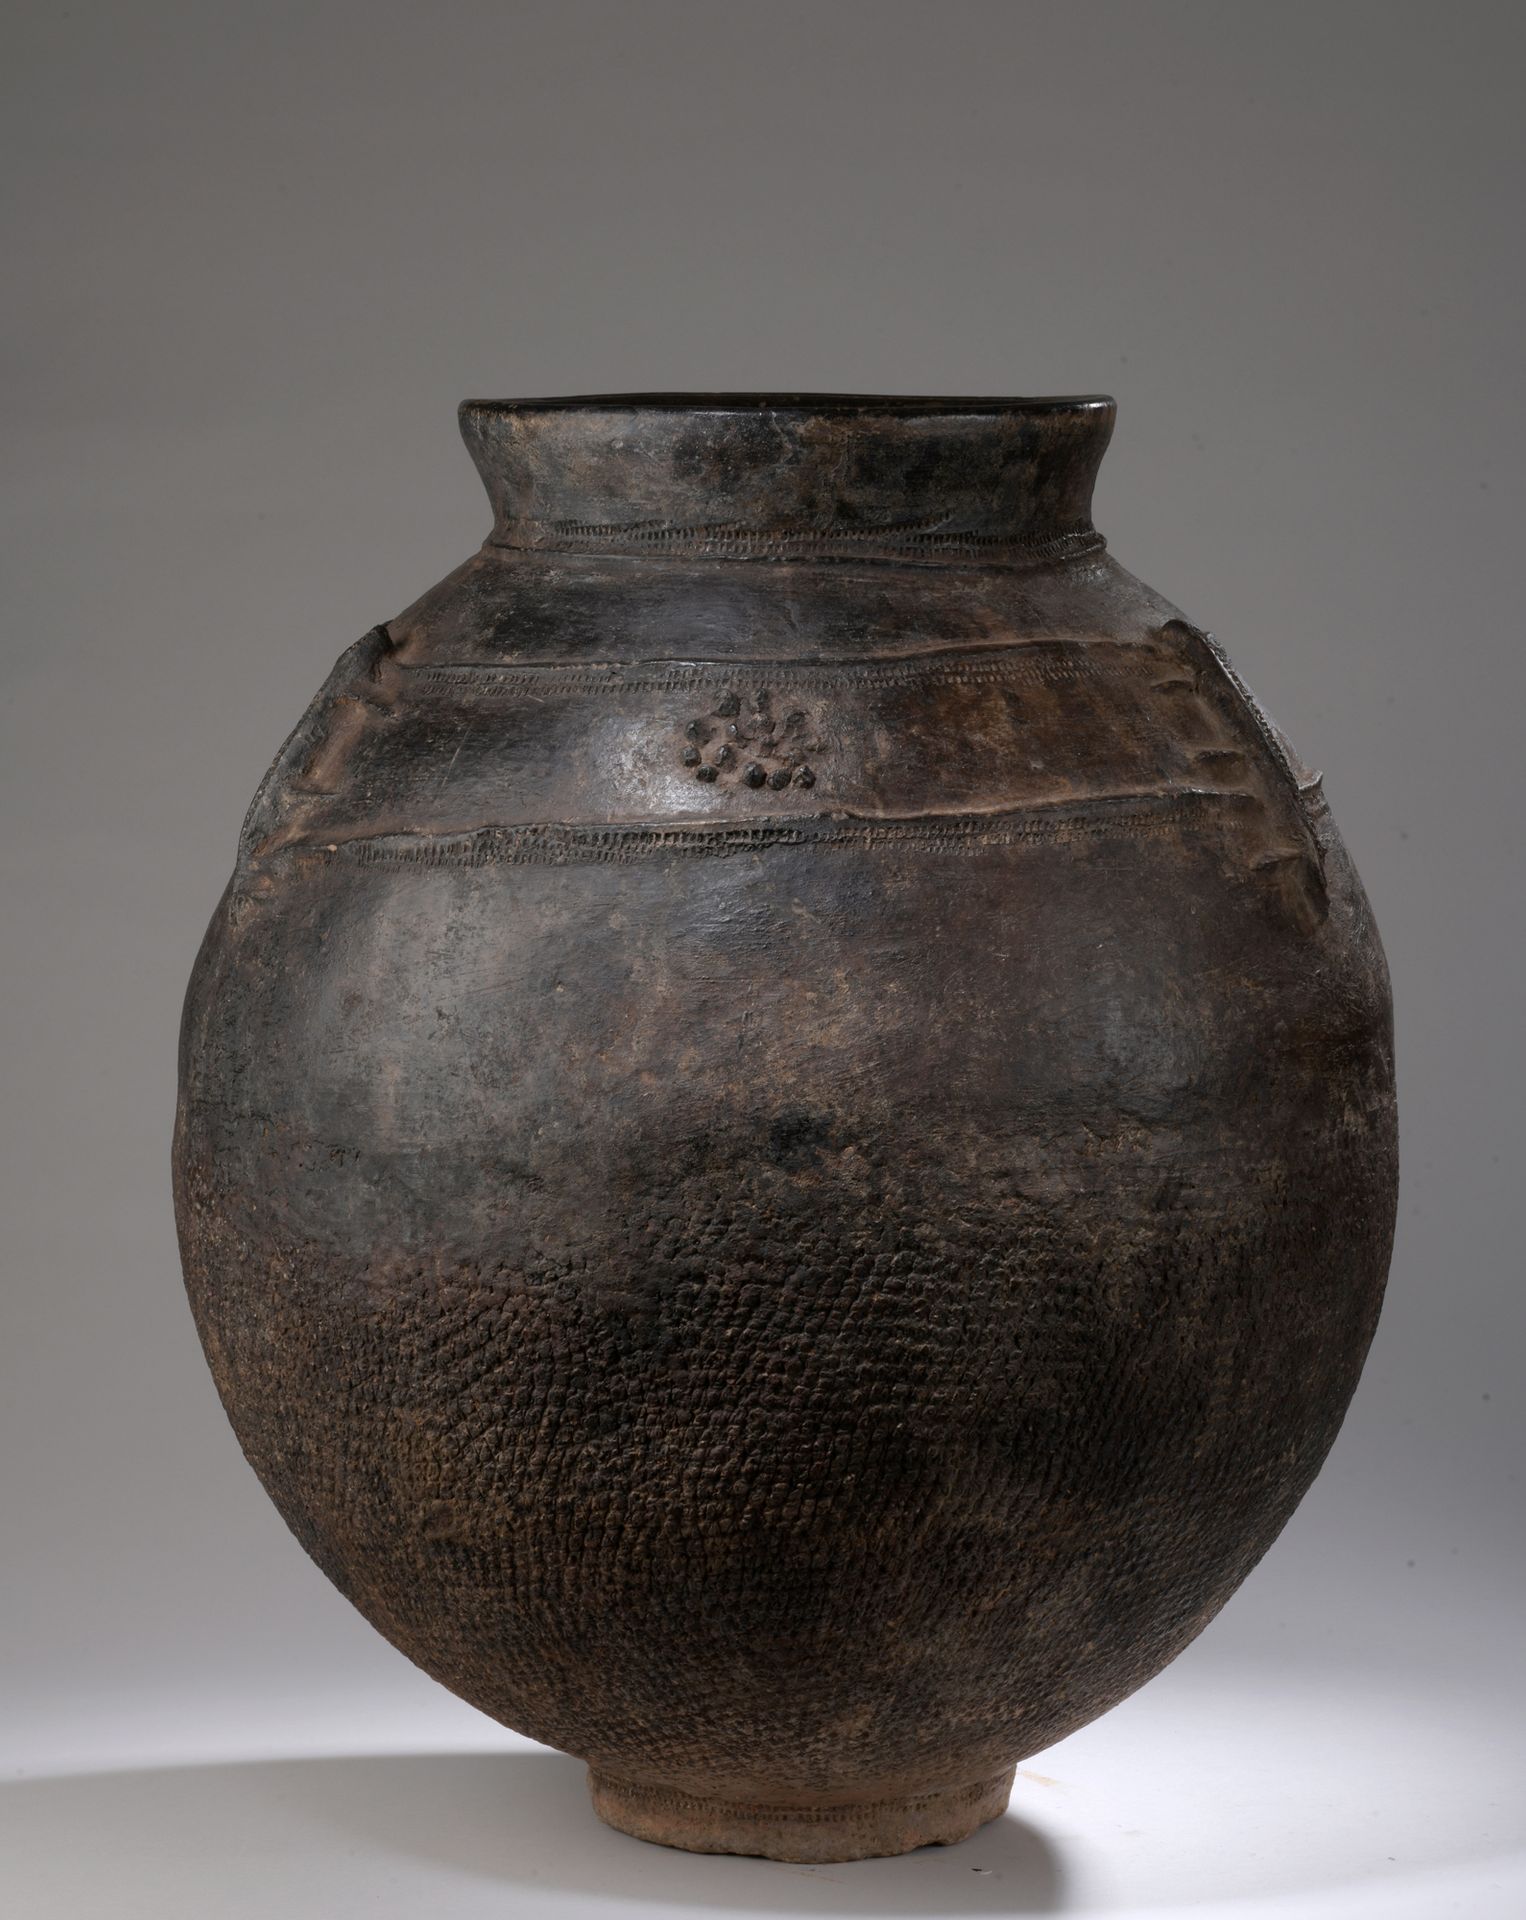 Null JARRE BAMBARA, 马里

陶器，带黑色滑石。

H.59 D. 45 cm

鹅卵石形的罐子，有一个短的基座，中度浮雕装饰，有变幻莫测的图&hellip;